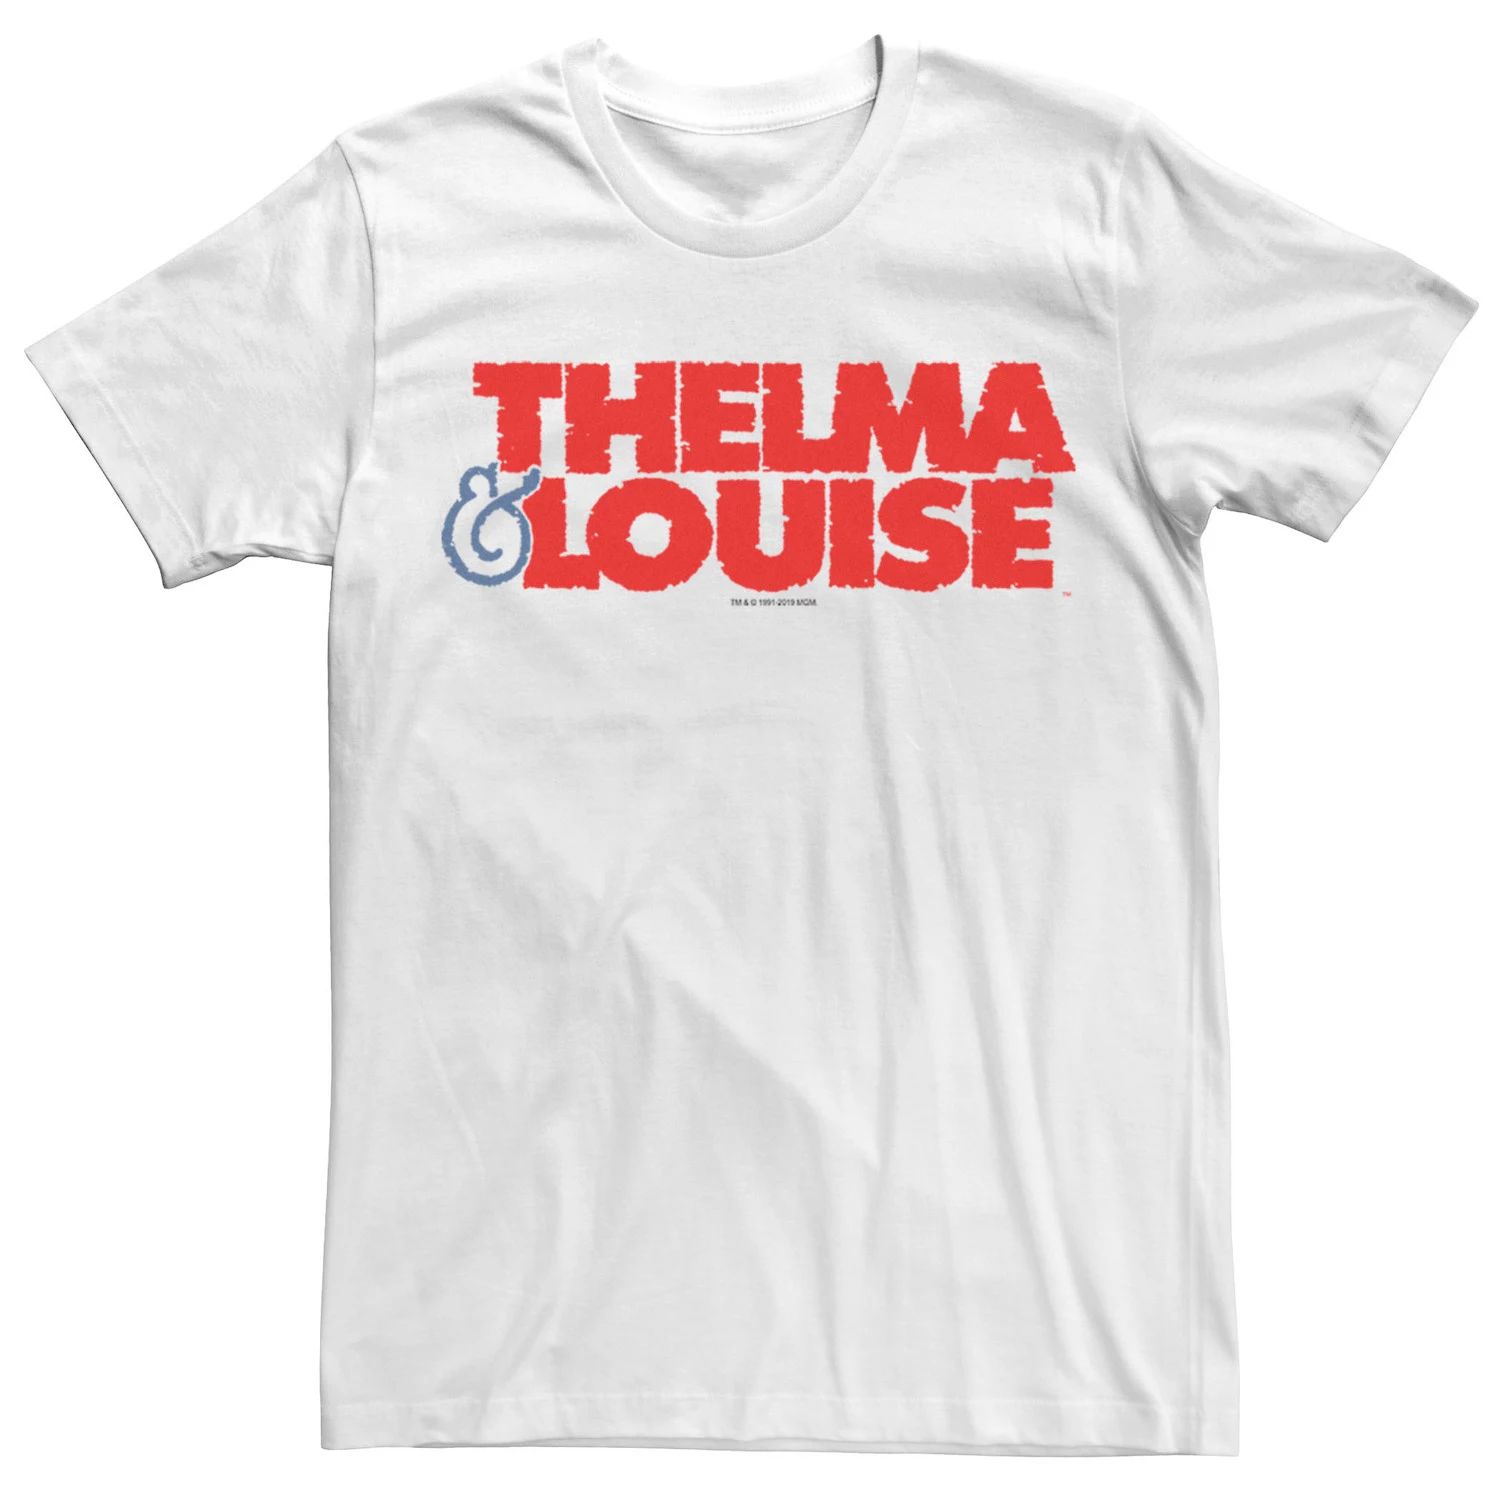 Мужская футболка с простым логотипом Thelma & Louise Licensed Character